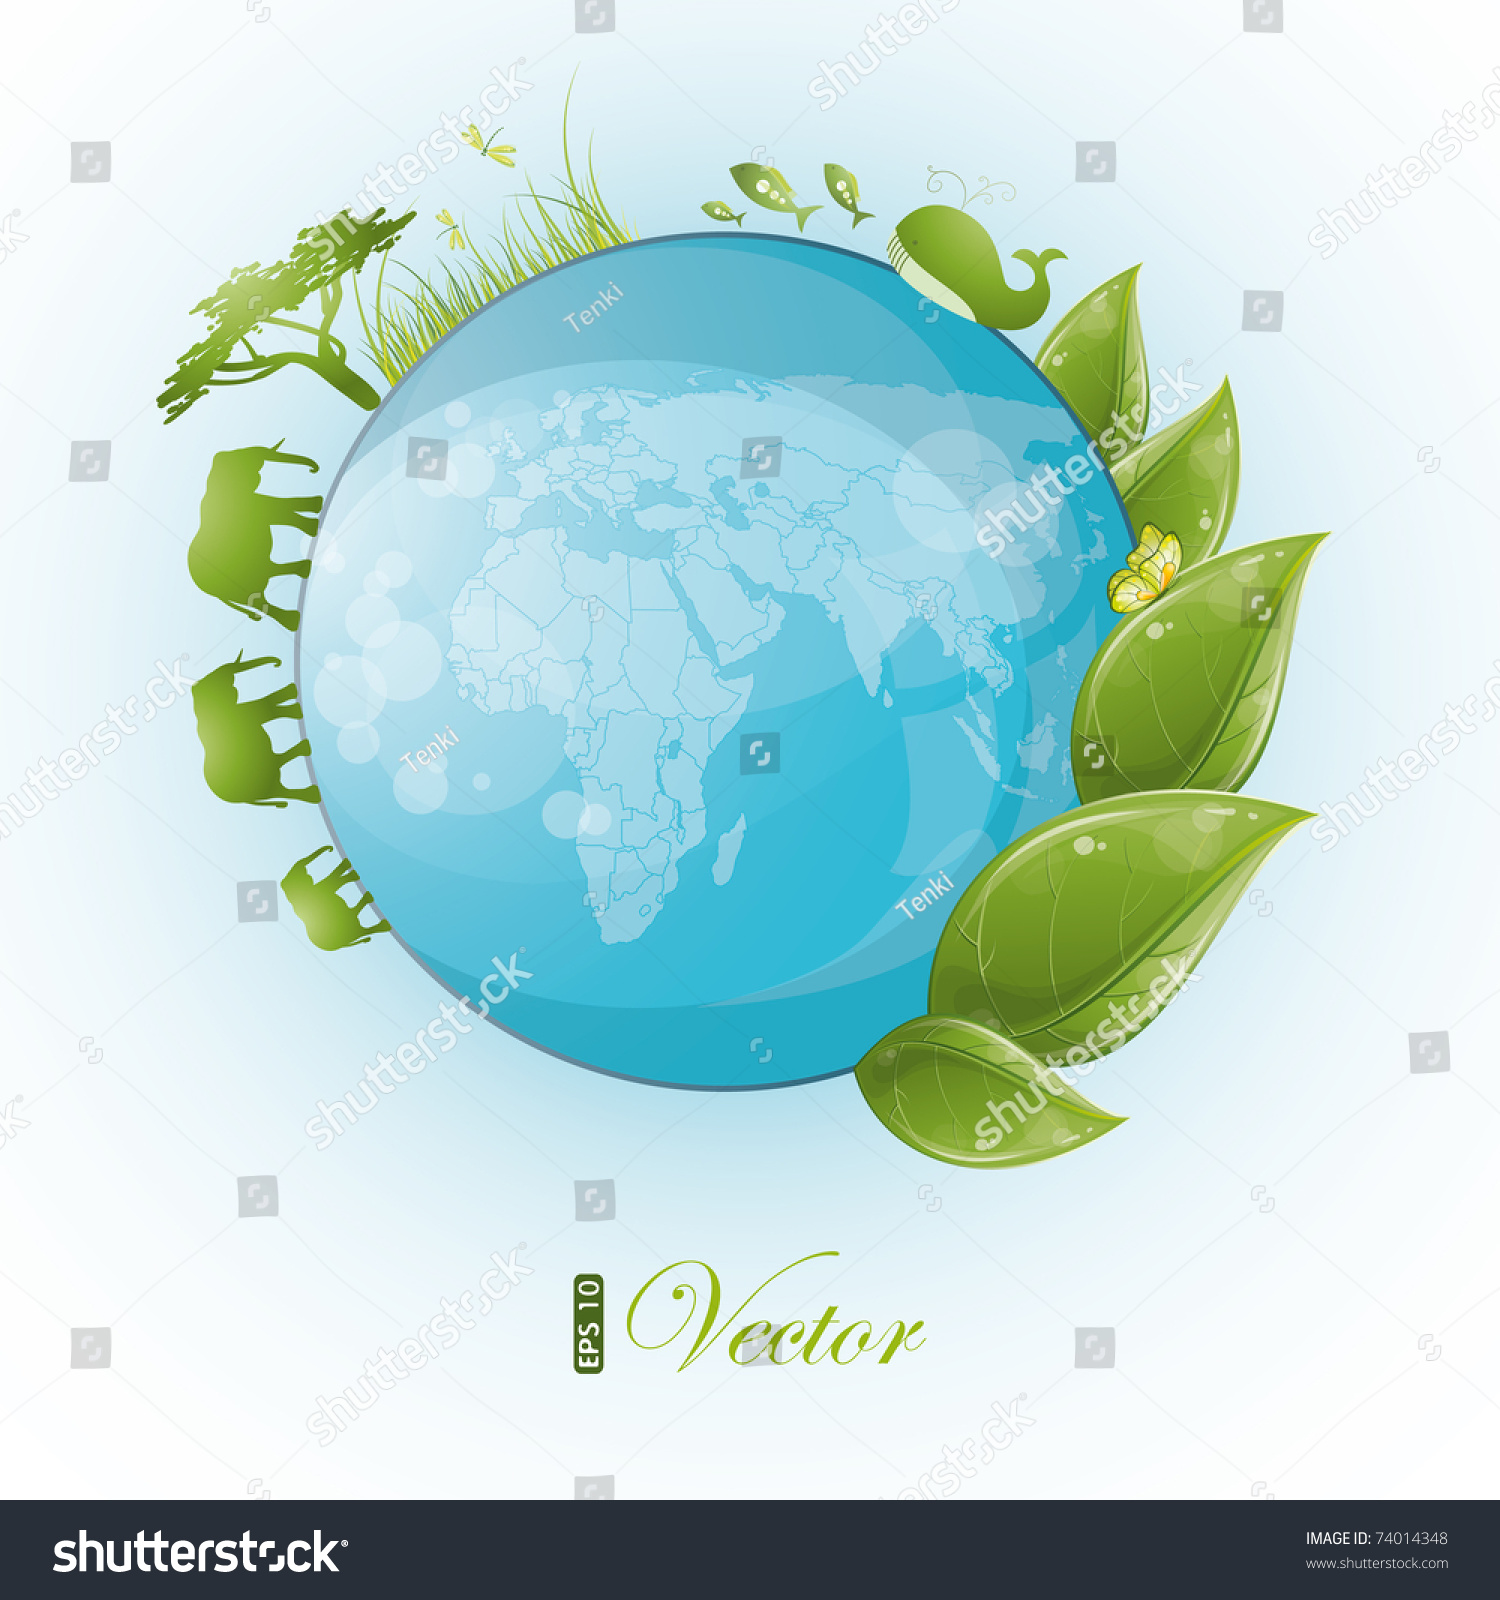 Round Nature Design Green Leaf Globe Stock Vector 74014348 ...